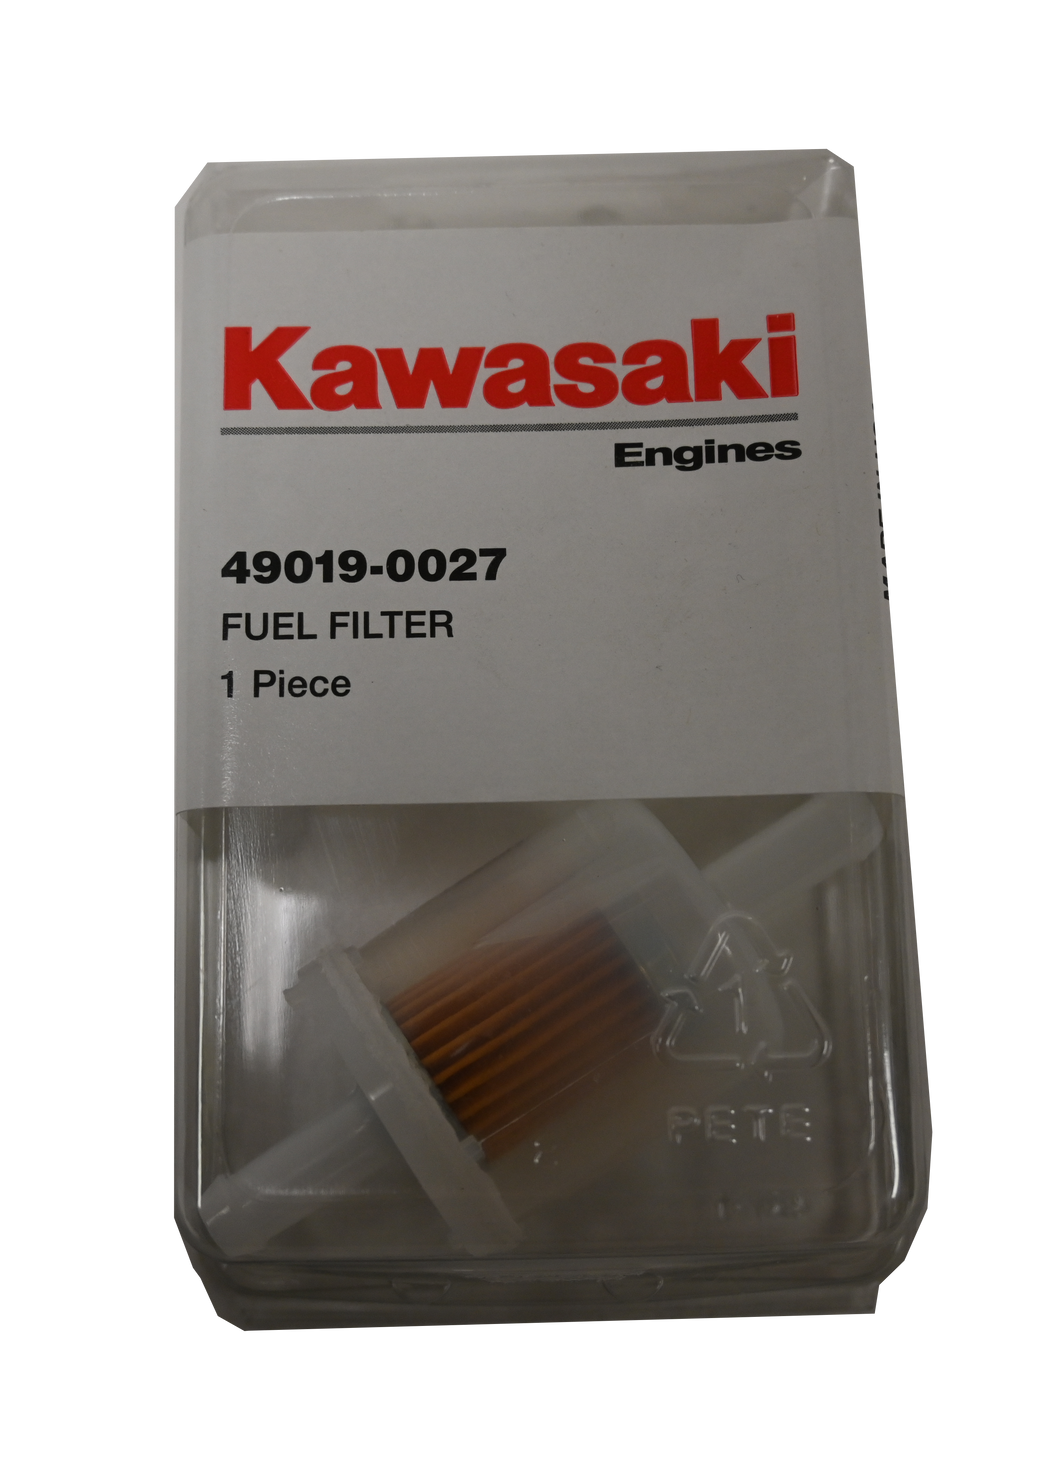 Kawasaki Fuel Filter (49019-0027)